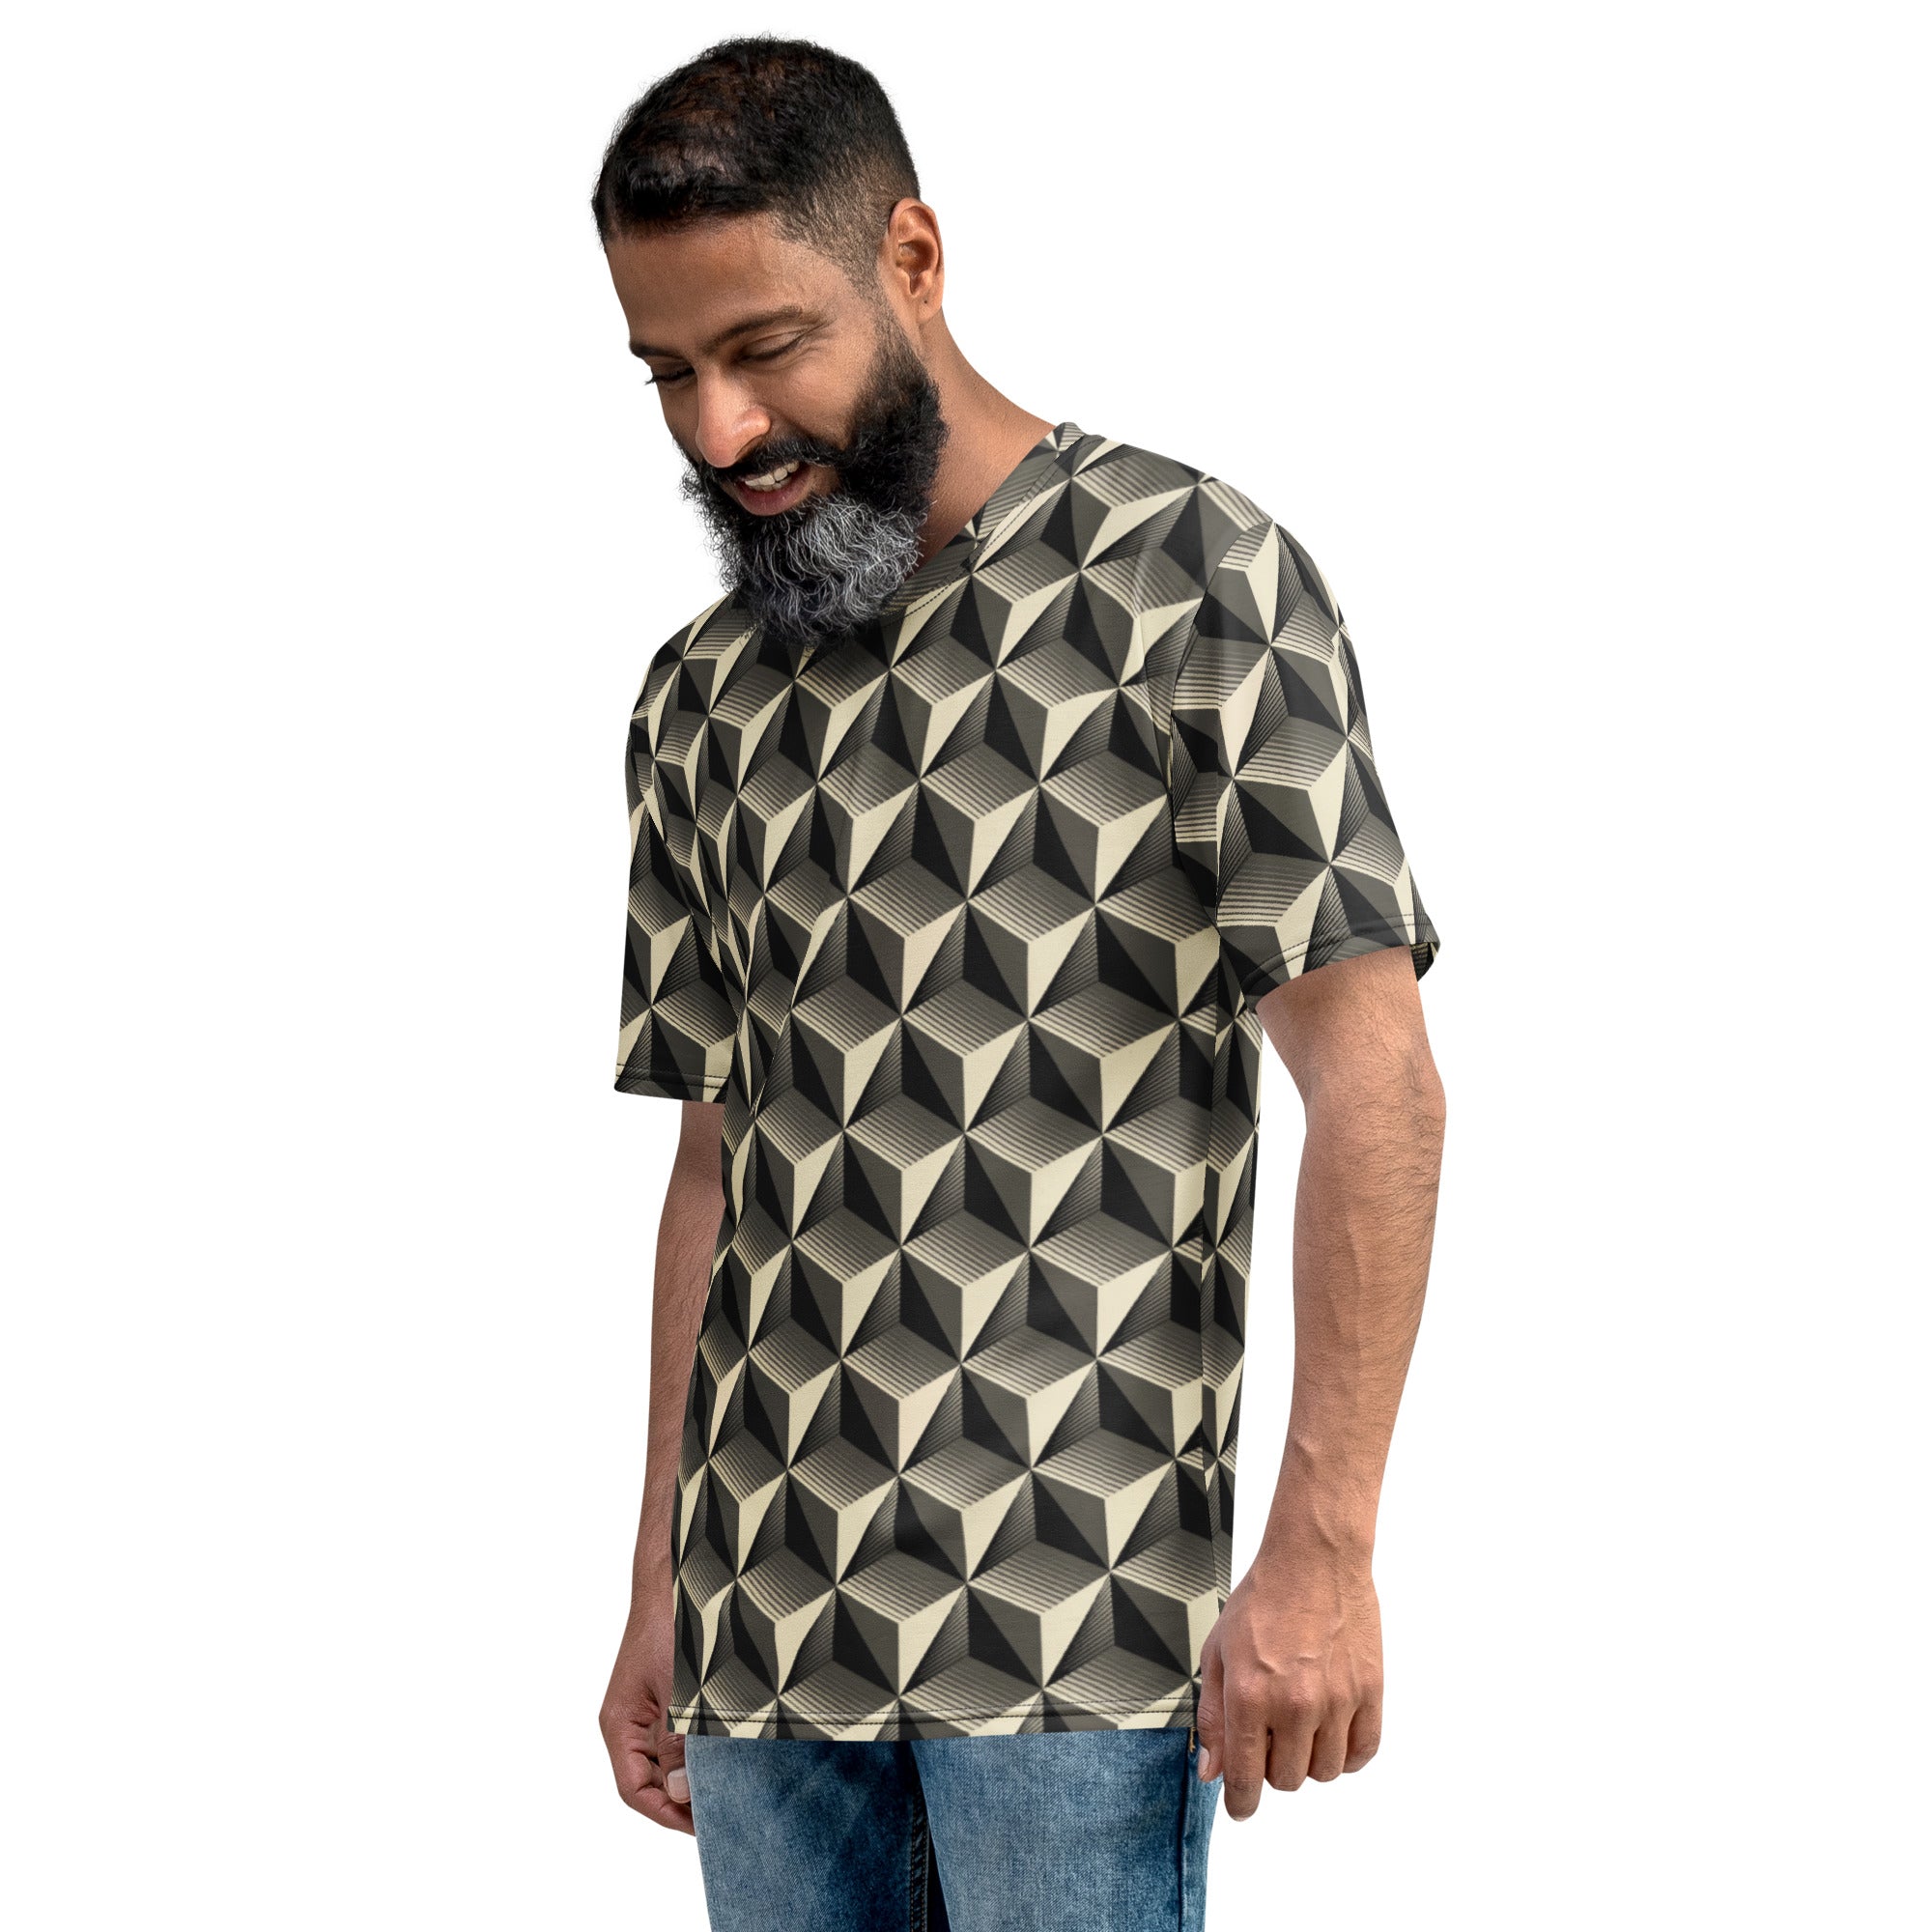 Black and White Graphic Cubes  designed Men's t-shirt, by Sensus Studio Design